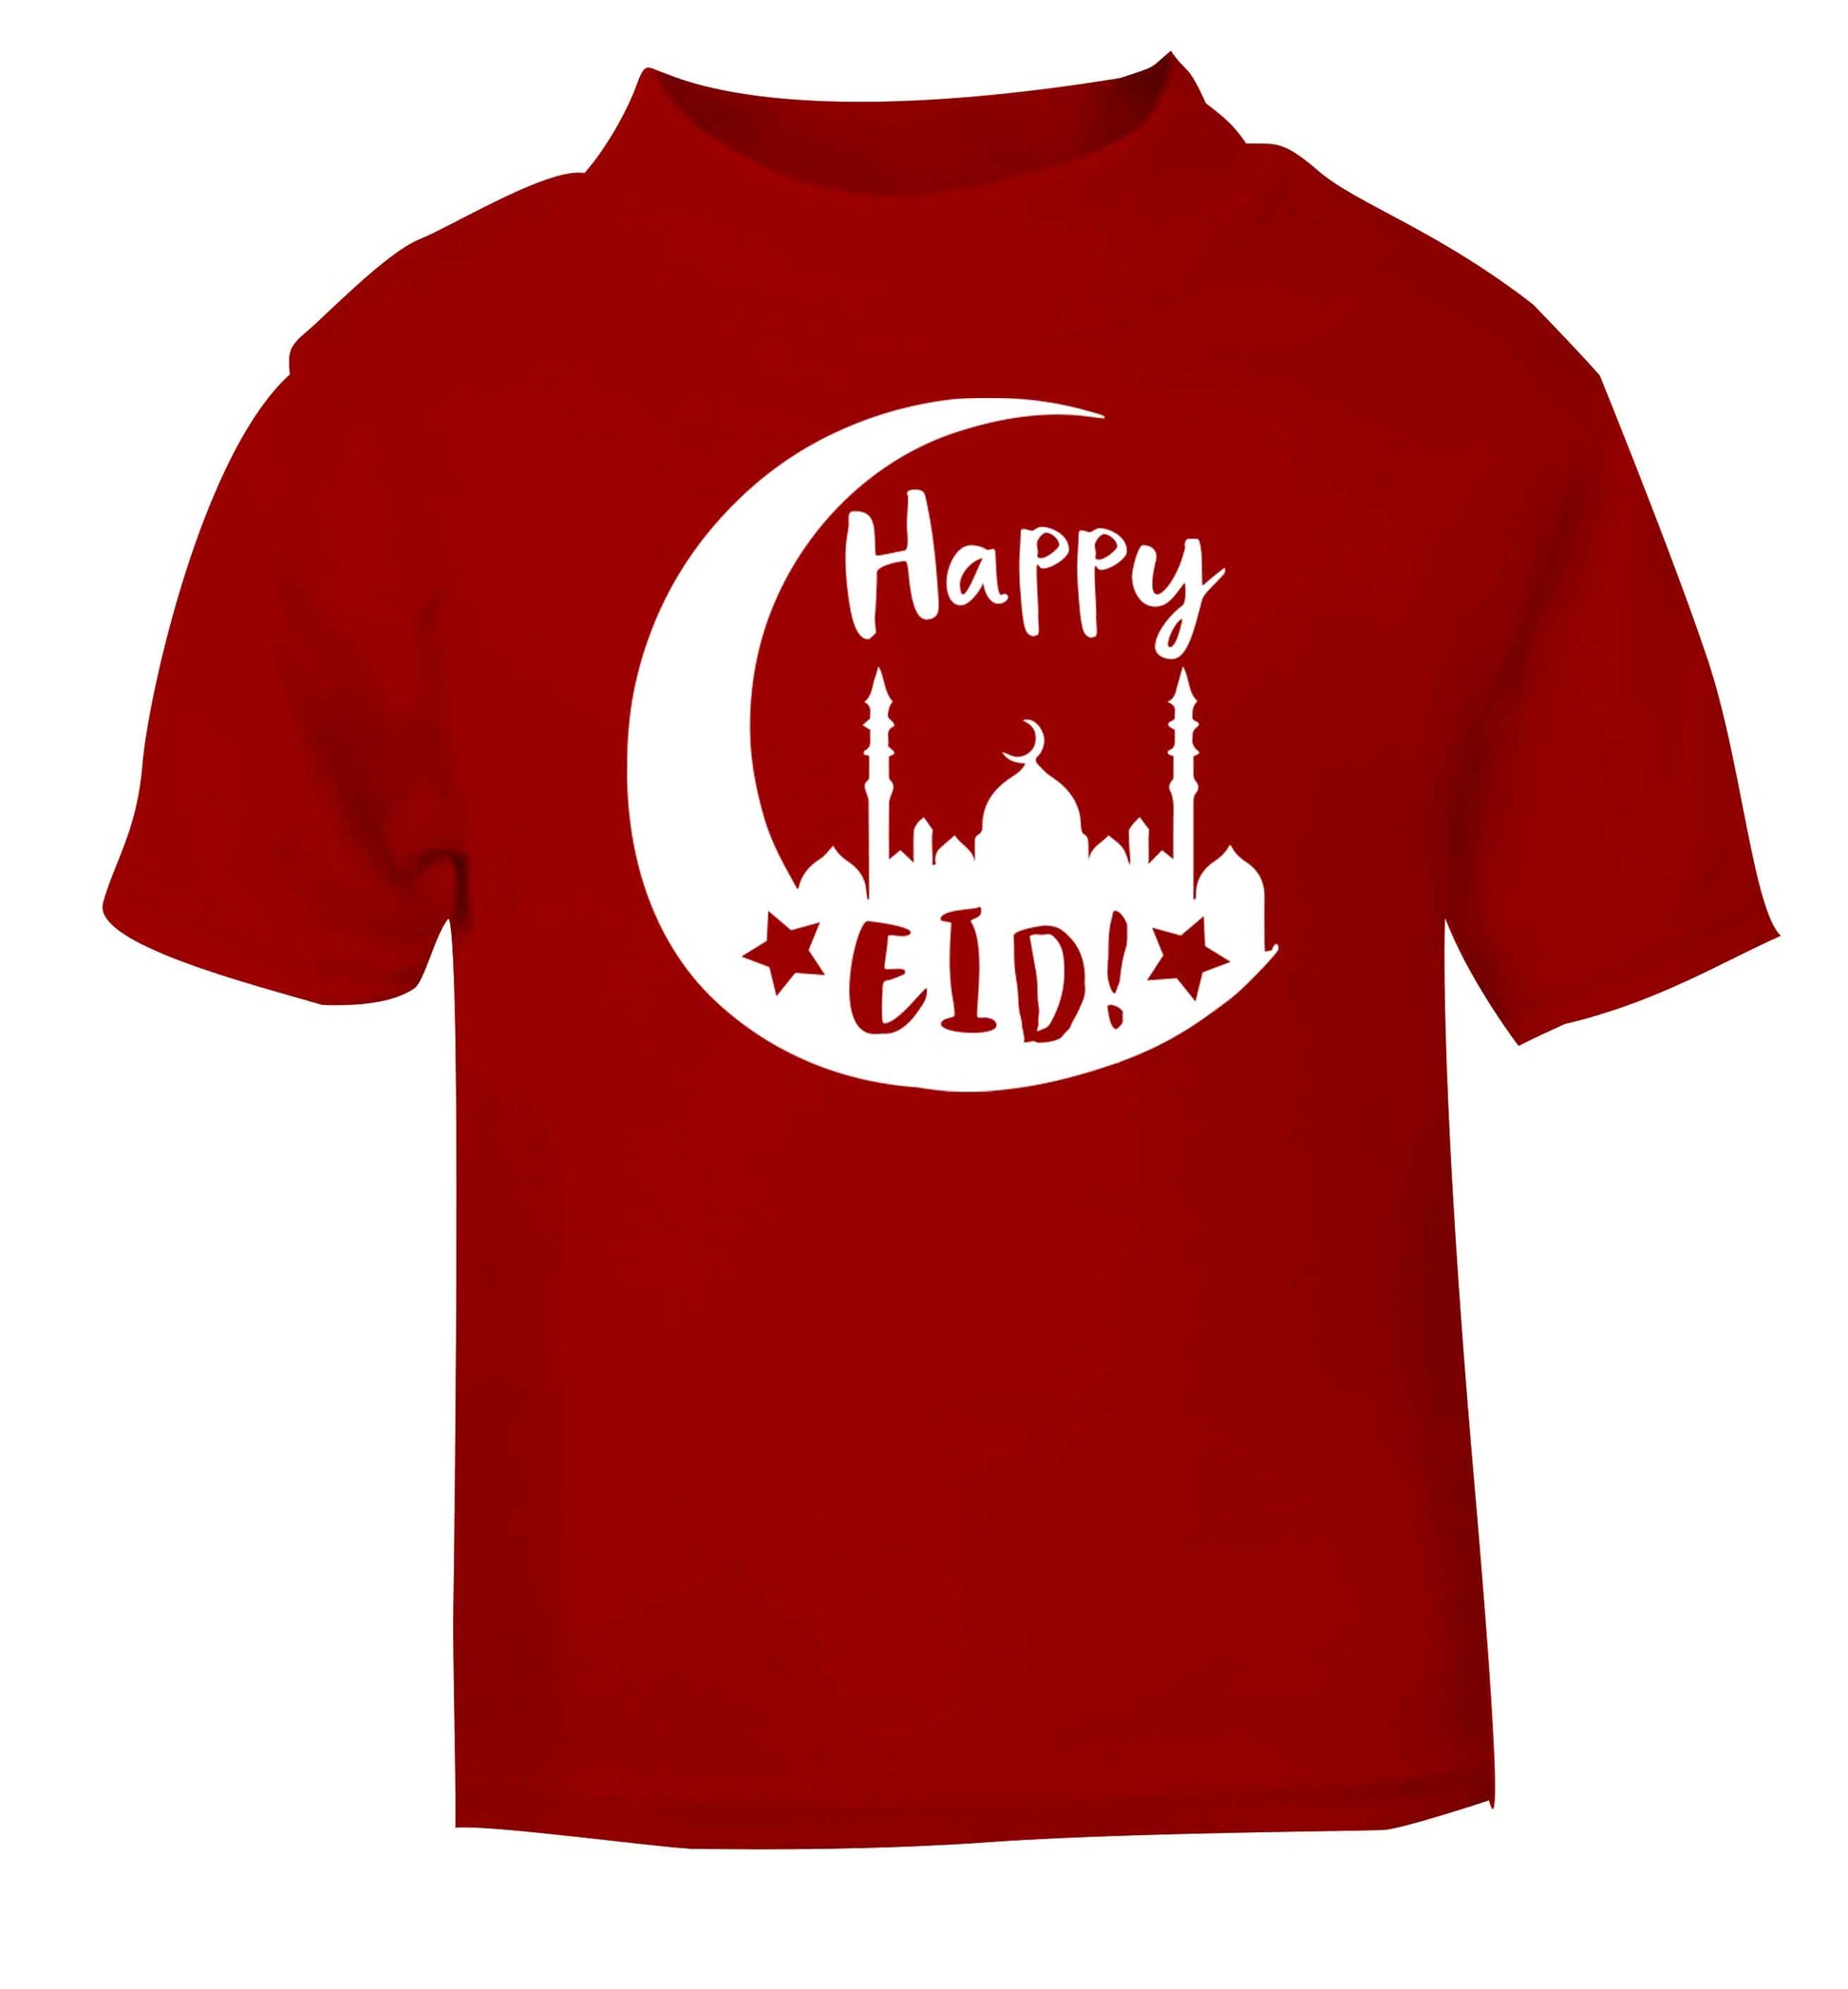 Happy Eid red baby toddler Tshirt 2 Years